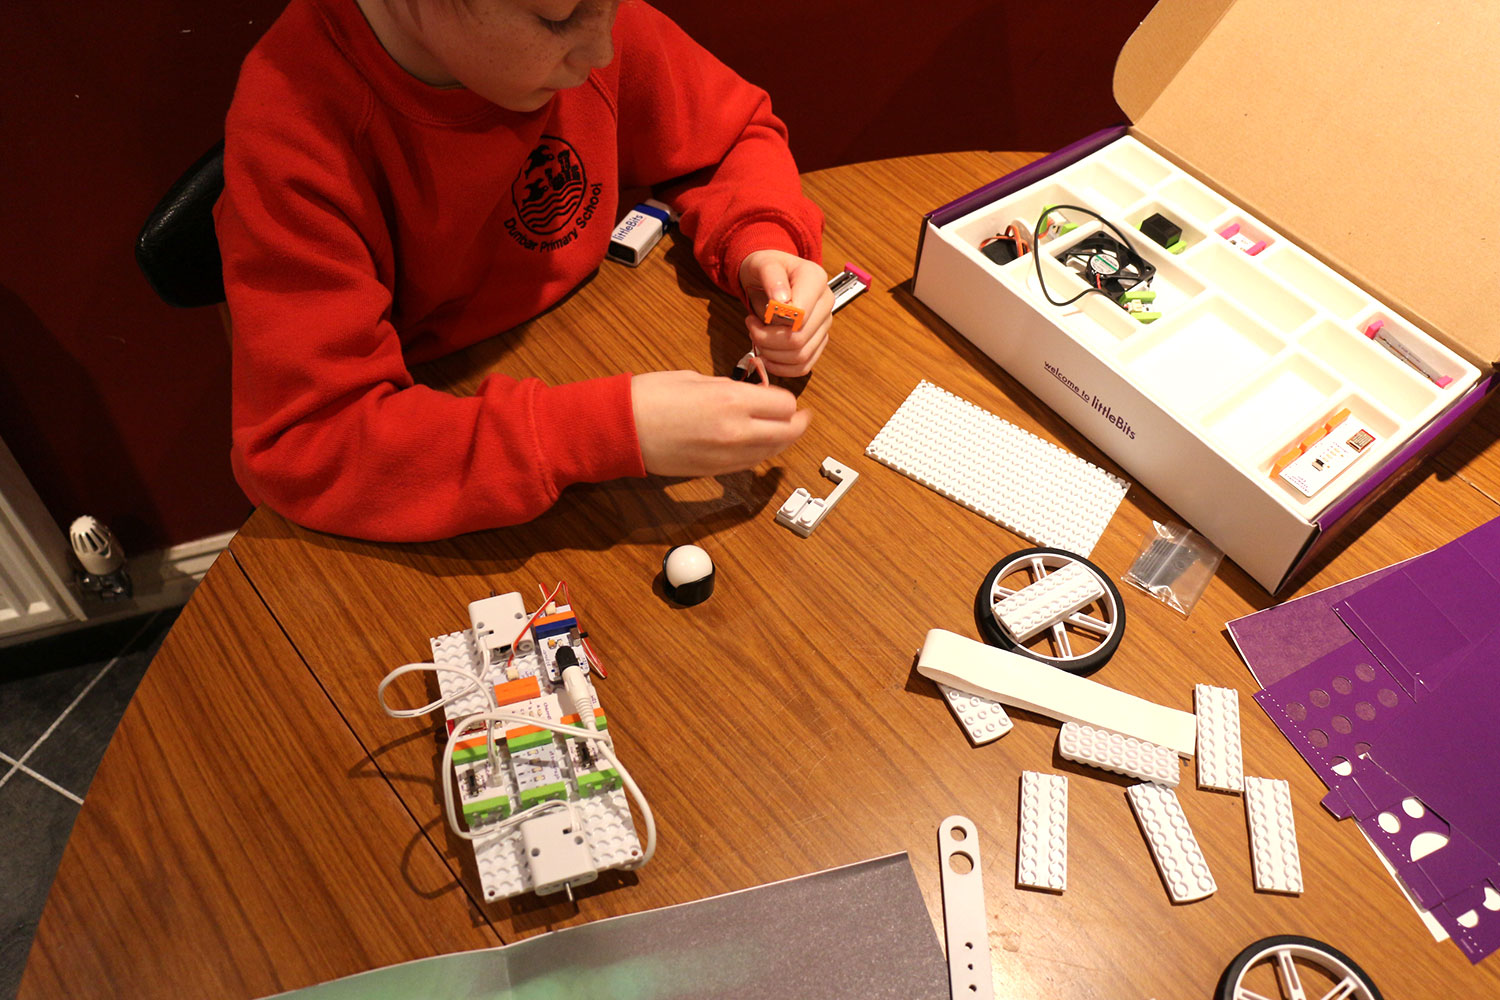 https://www.digitaltrends.com/wp-content/uploads/2015/11/LittleBits-Gizmos-Gadgets-8.jpg?fit=1500%2C1000&p=1